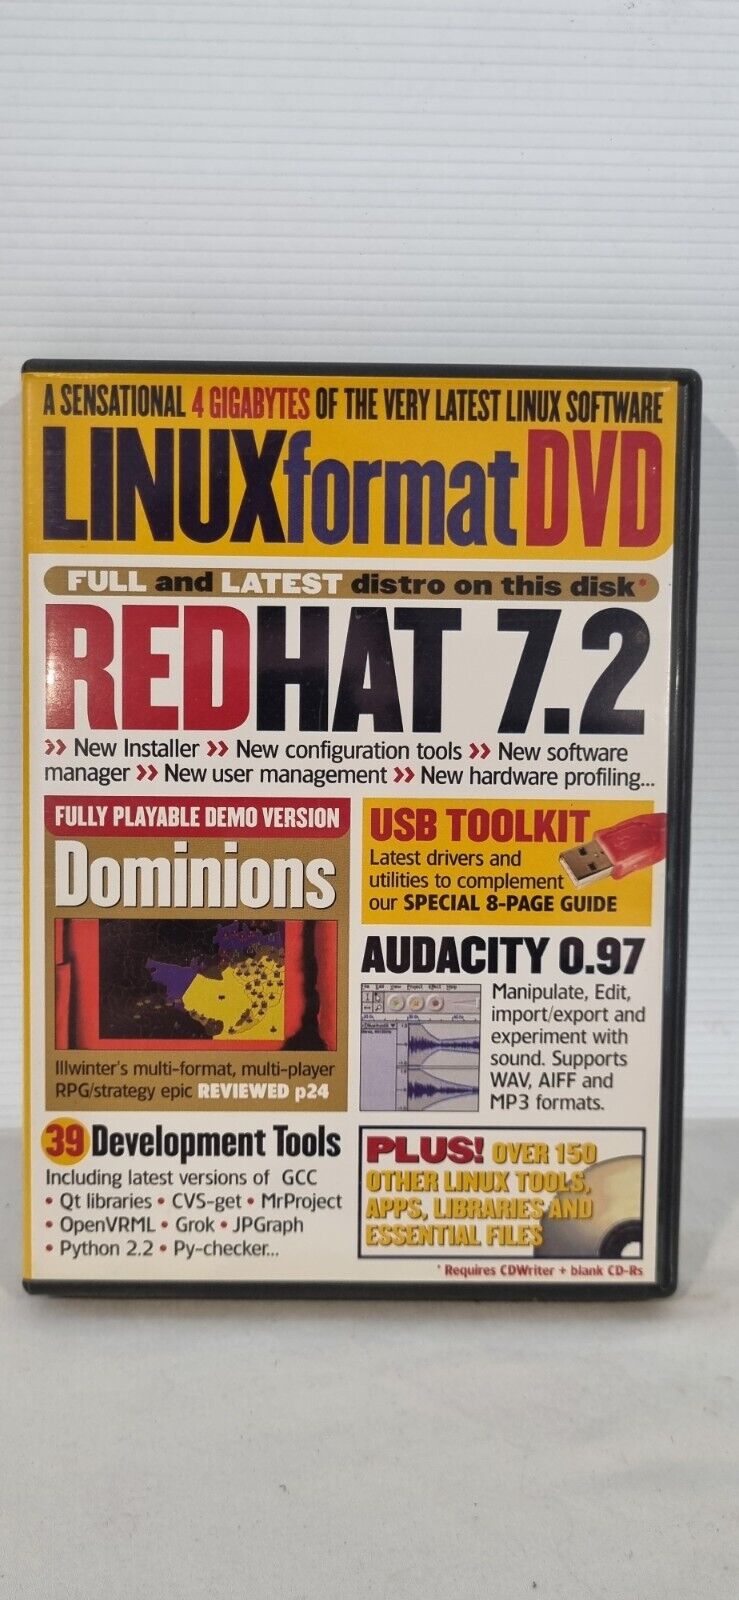 Linux Format DVD Redhat 7.2, 39 Development Tools, Dominions, Audacity